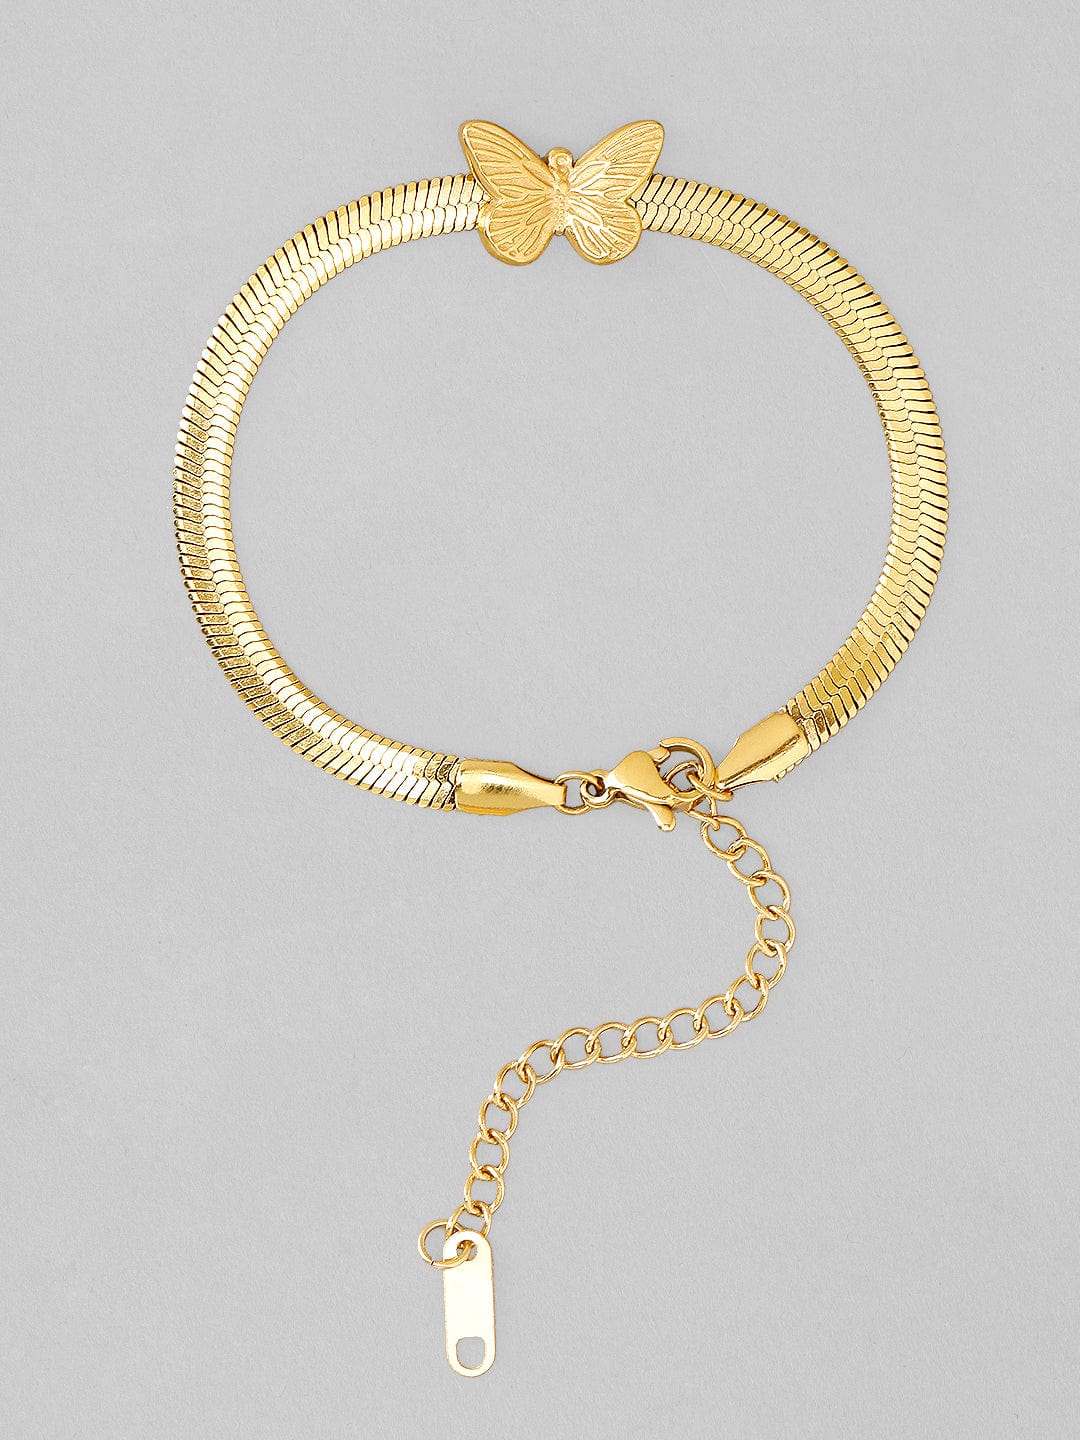 Buy 18K Gold Bracelets for Women, Dainty Bracelet Rope Chain, Thin Gold  Bracelet Gifts UK, Thin Gold Bracelet Chains for Her by Twistedpendant  Online in India - Etsy